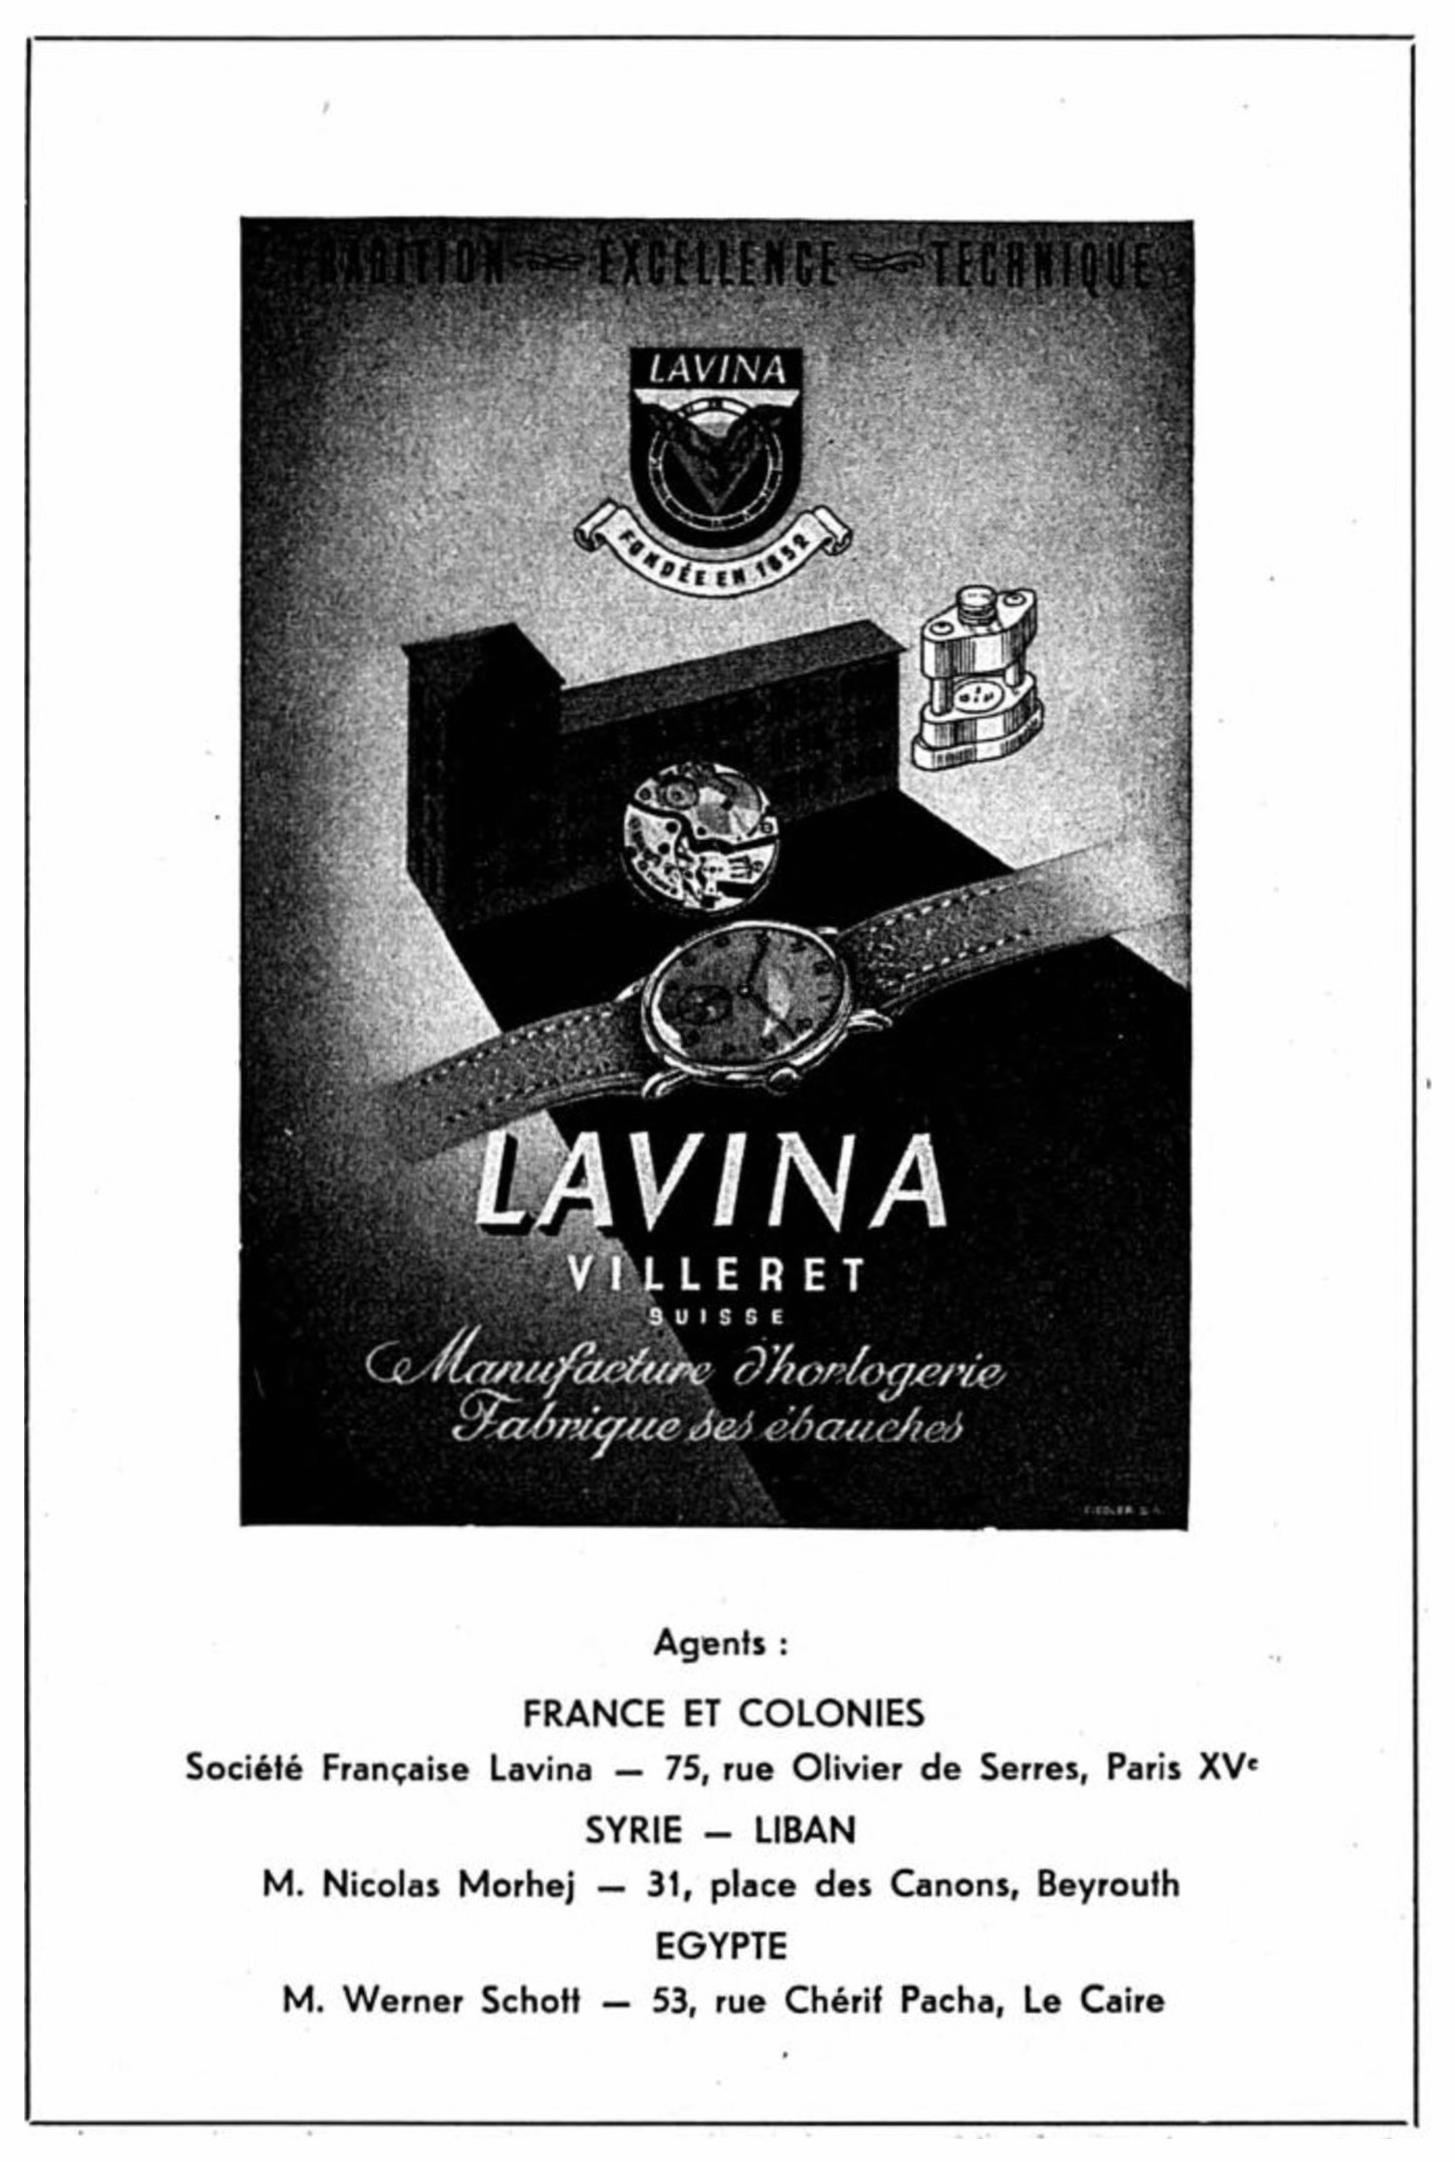 Lavina 1955 0.jpg